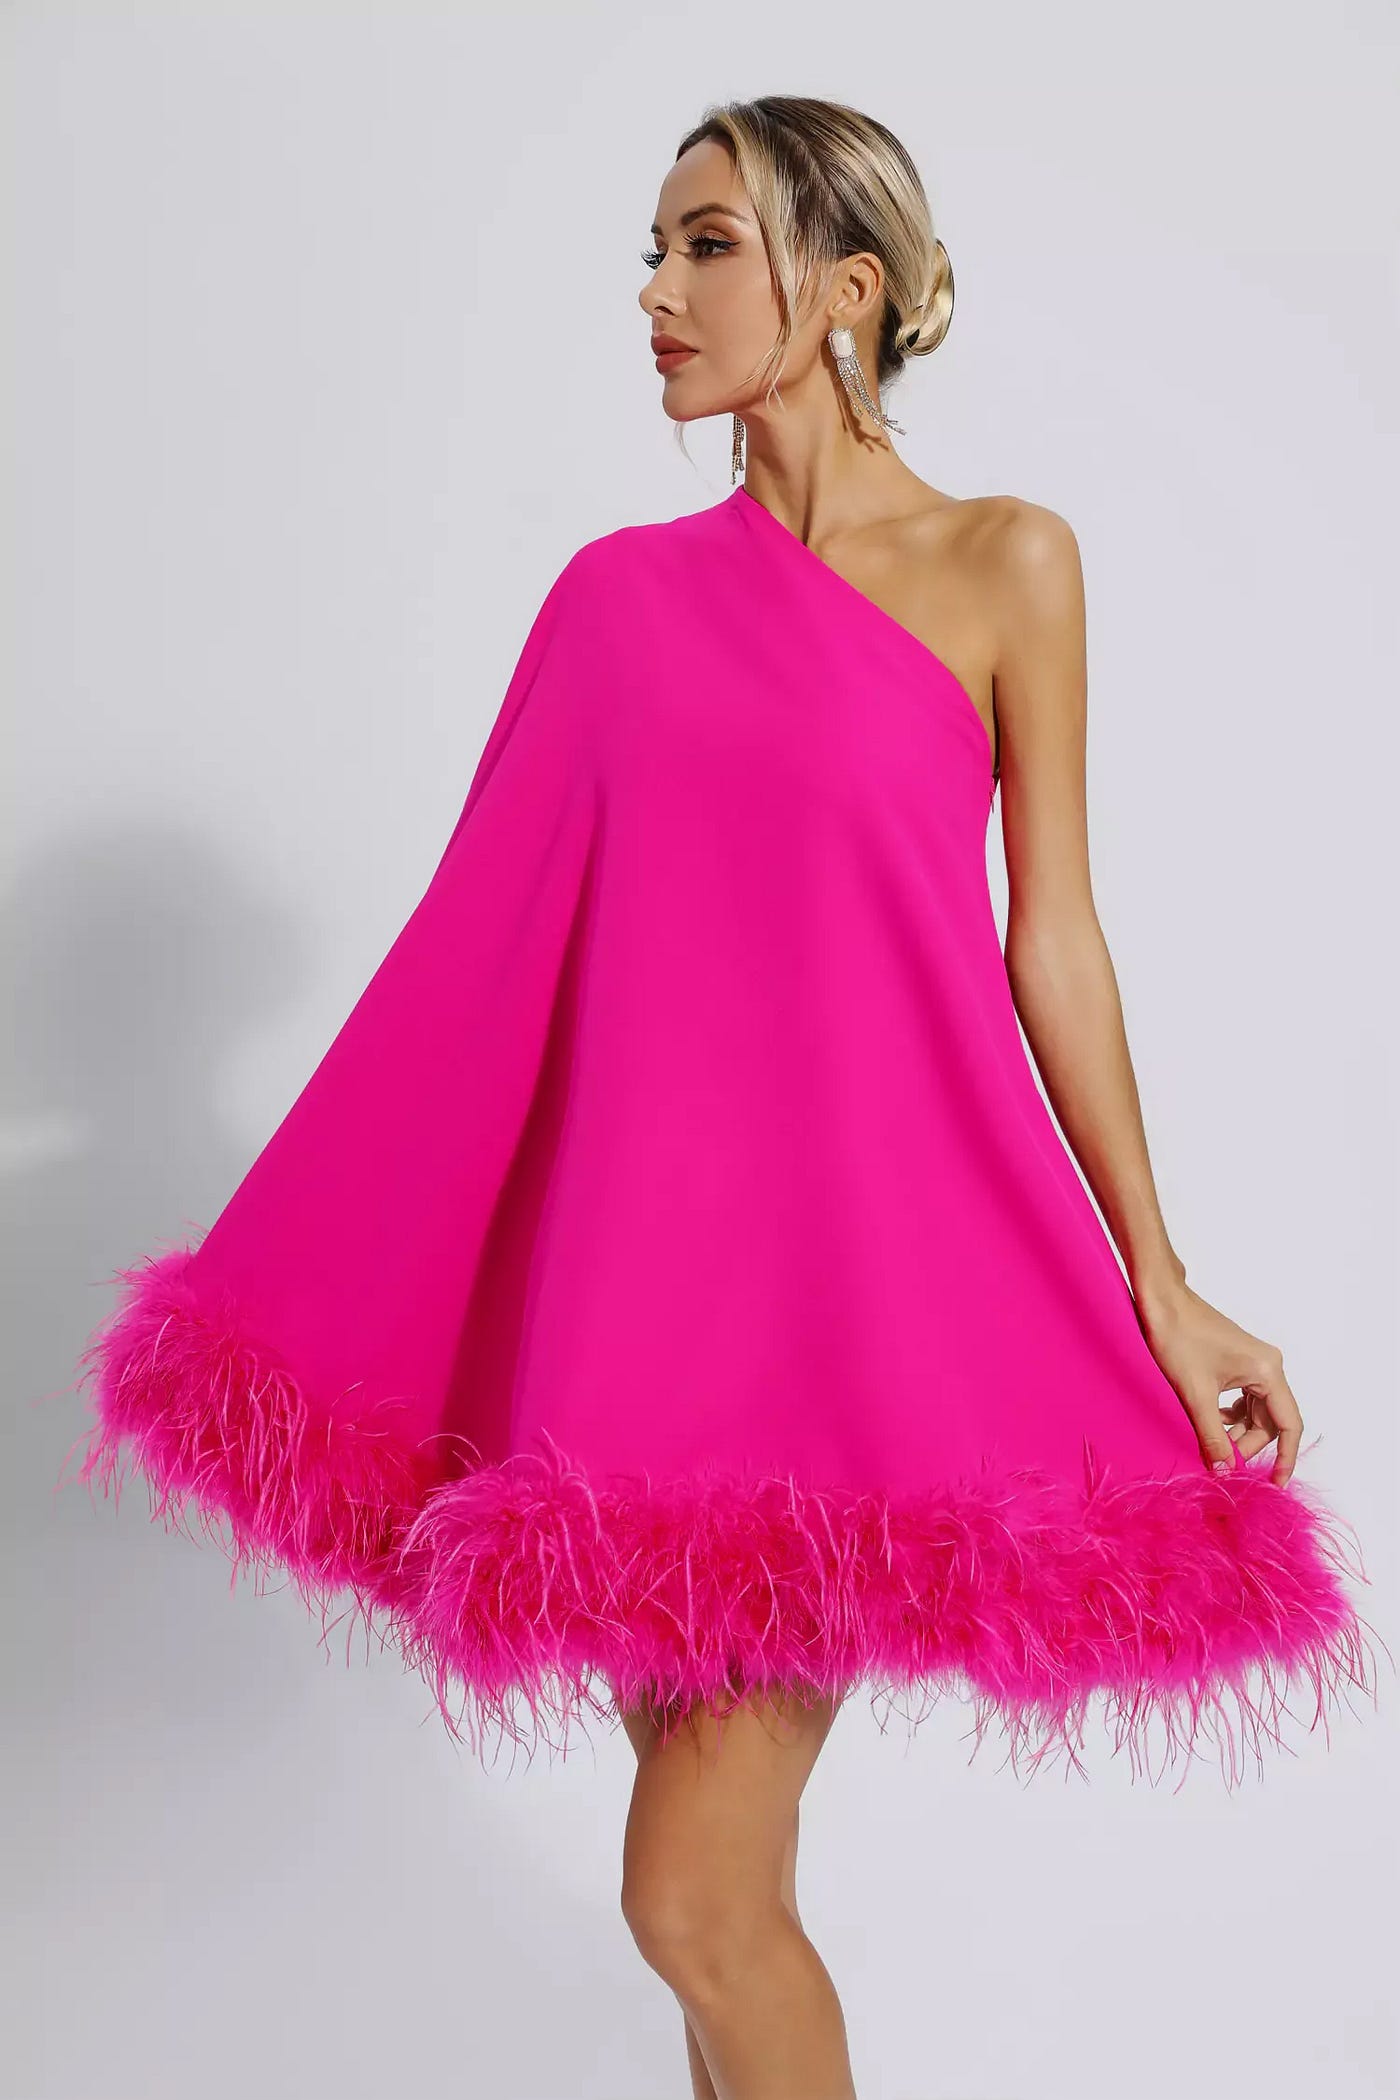 Feather Dress, Modern Women's Fashion